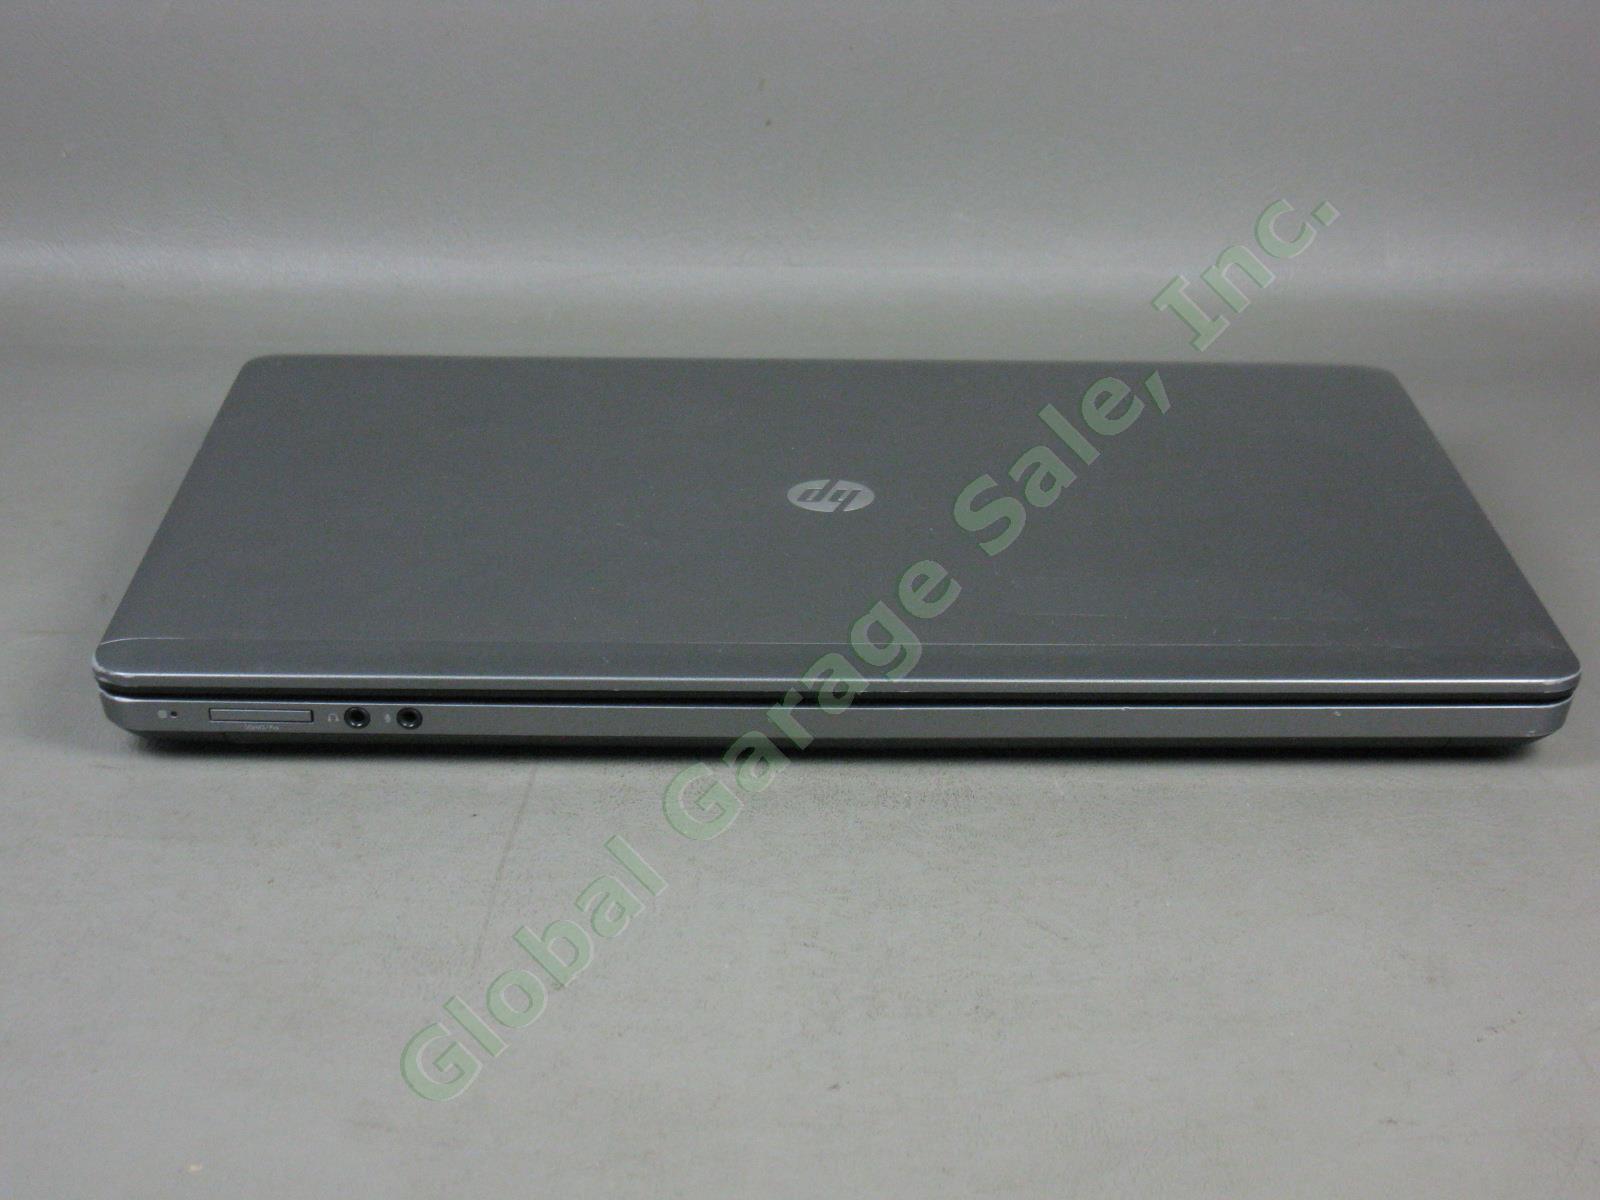 HP ProBook 4540s Laptop Computer Intel i5 2.60GHz 300GB HDD 4GB RAM Win 10 Pro 3